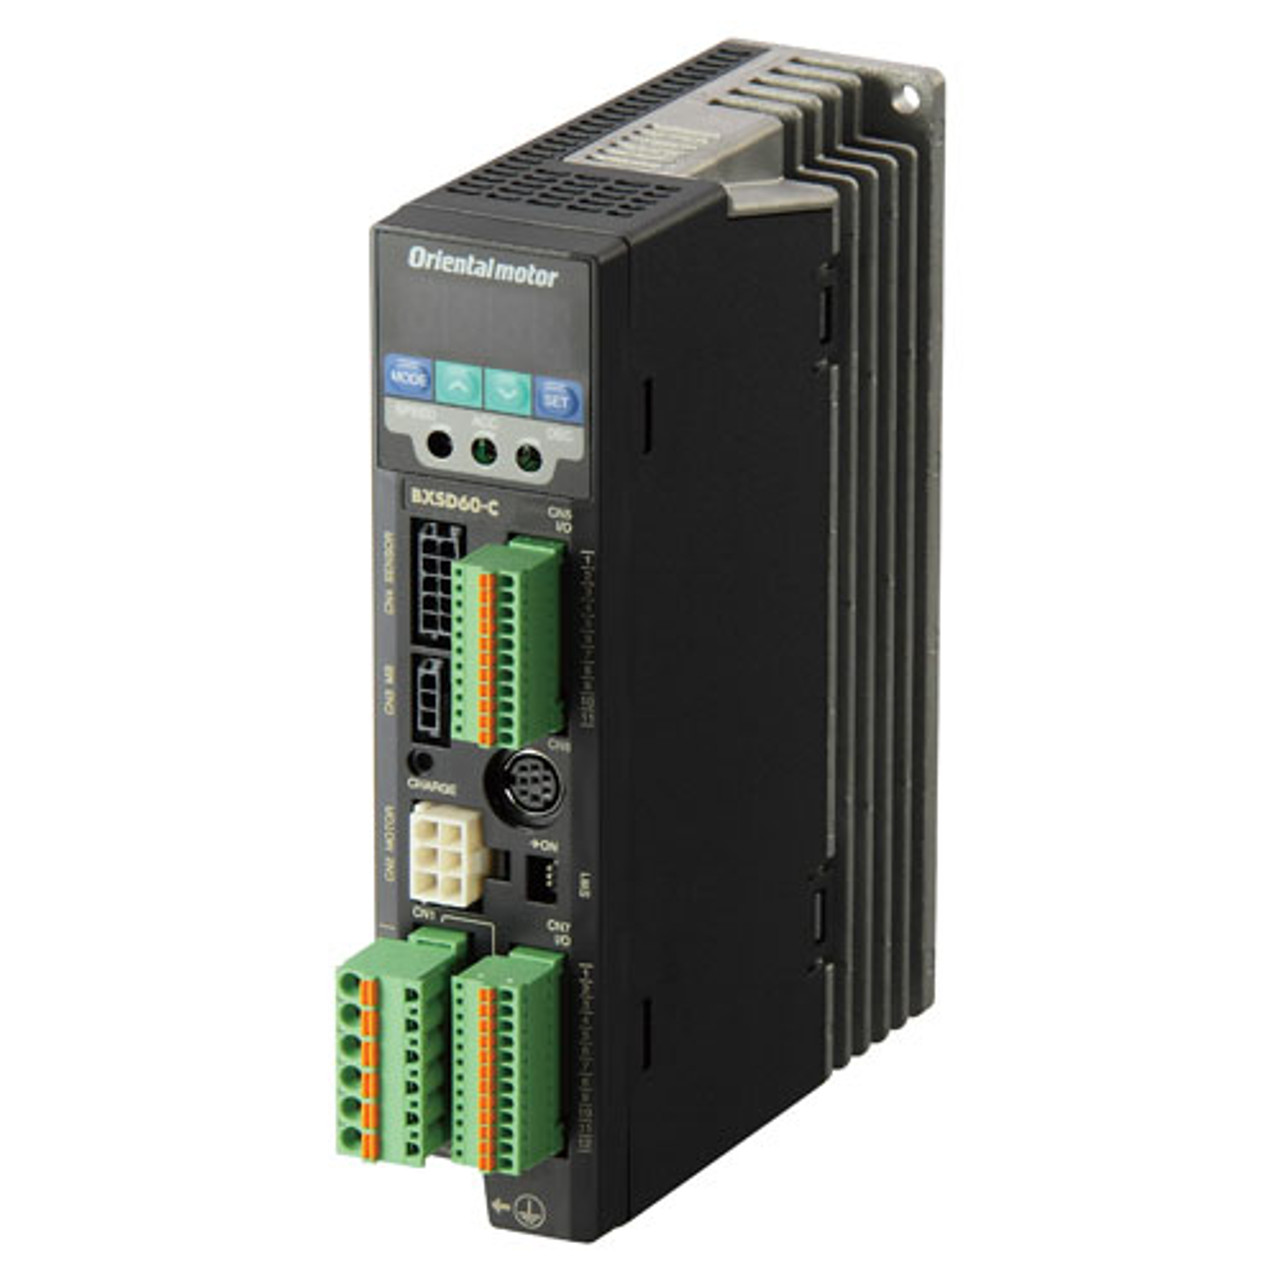 BXSD400-C - Product Image